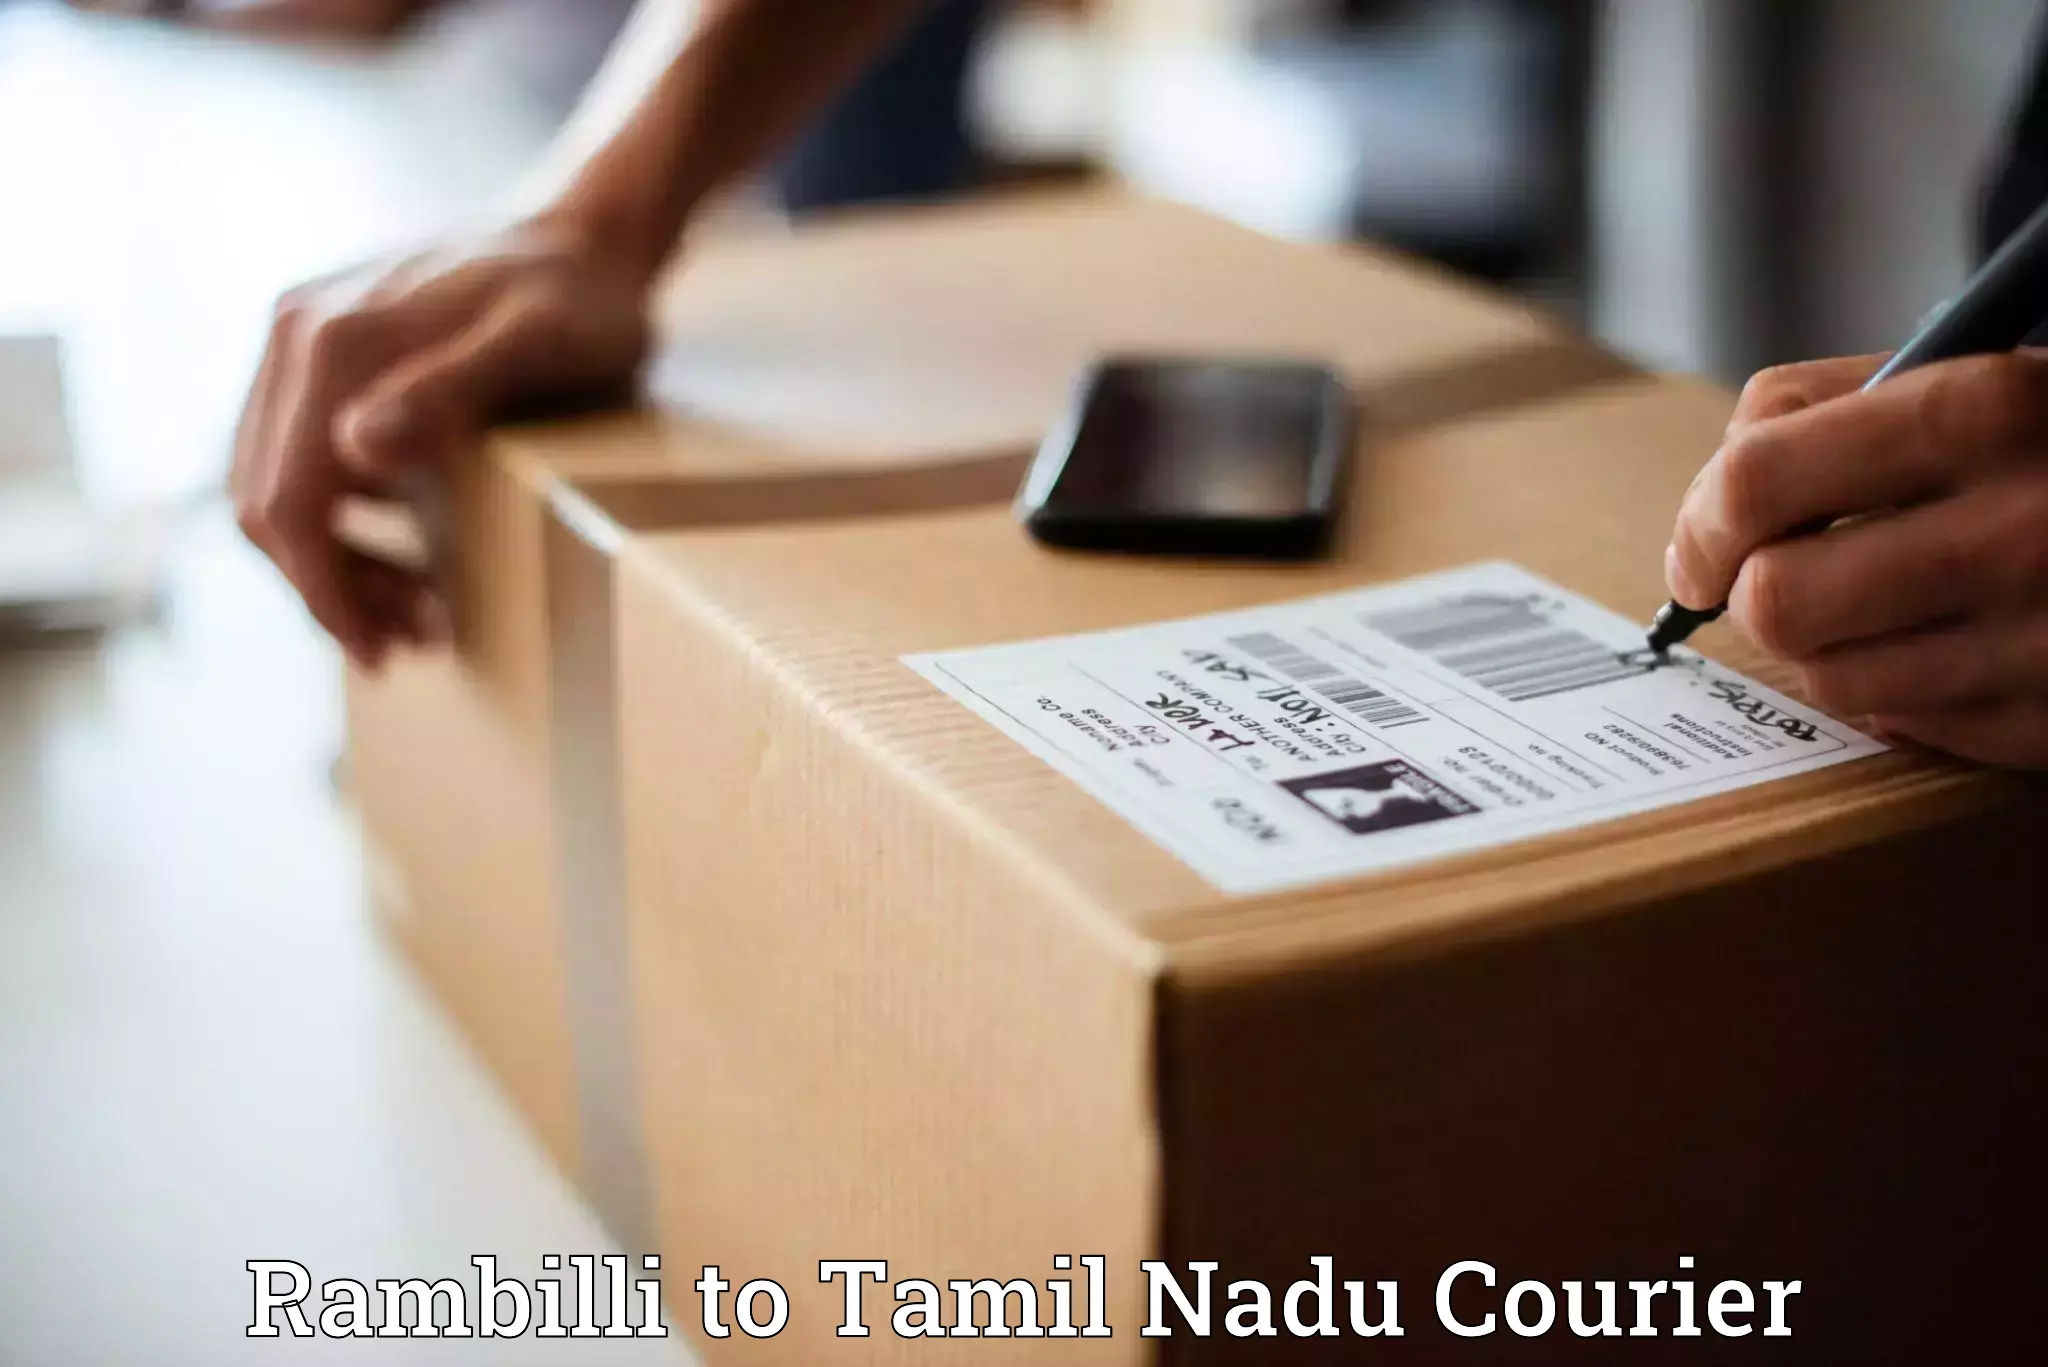 Express logistics service Rambilli to Chennai Port